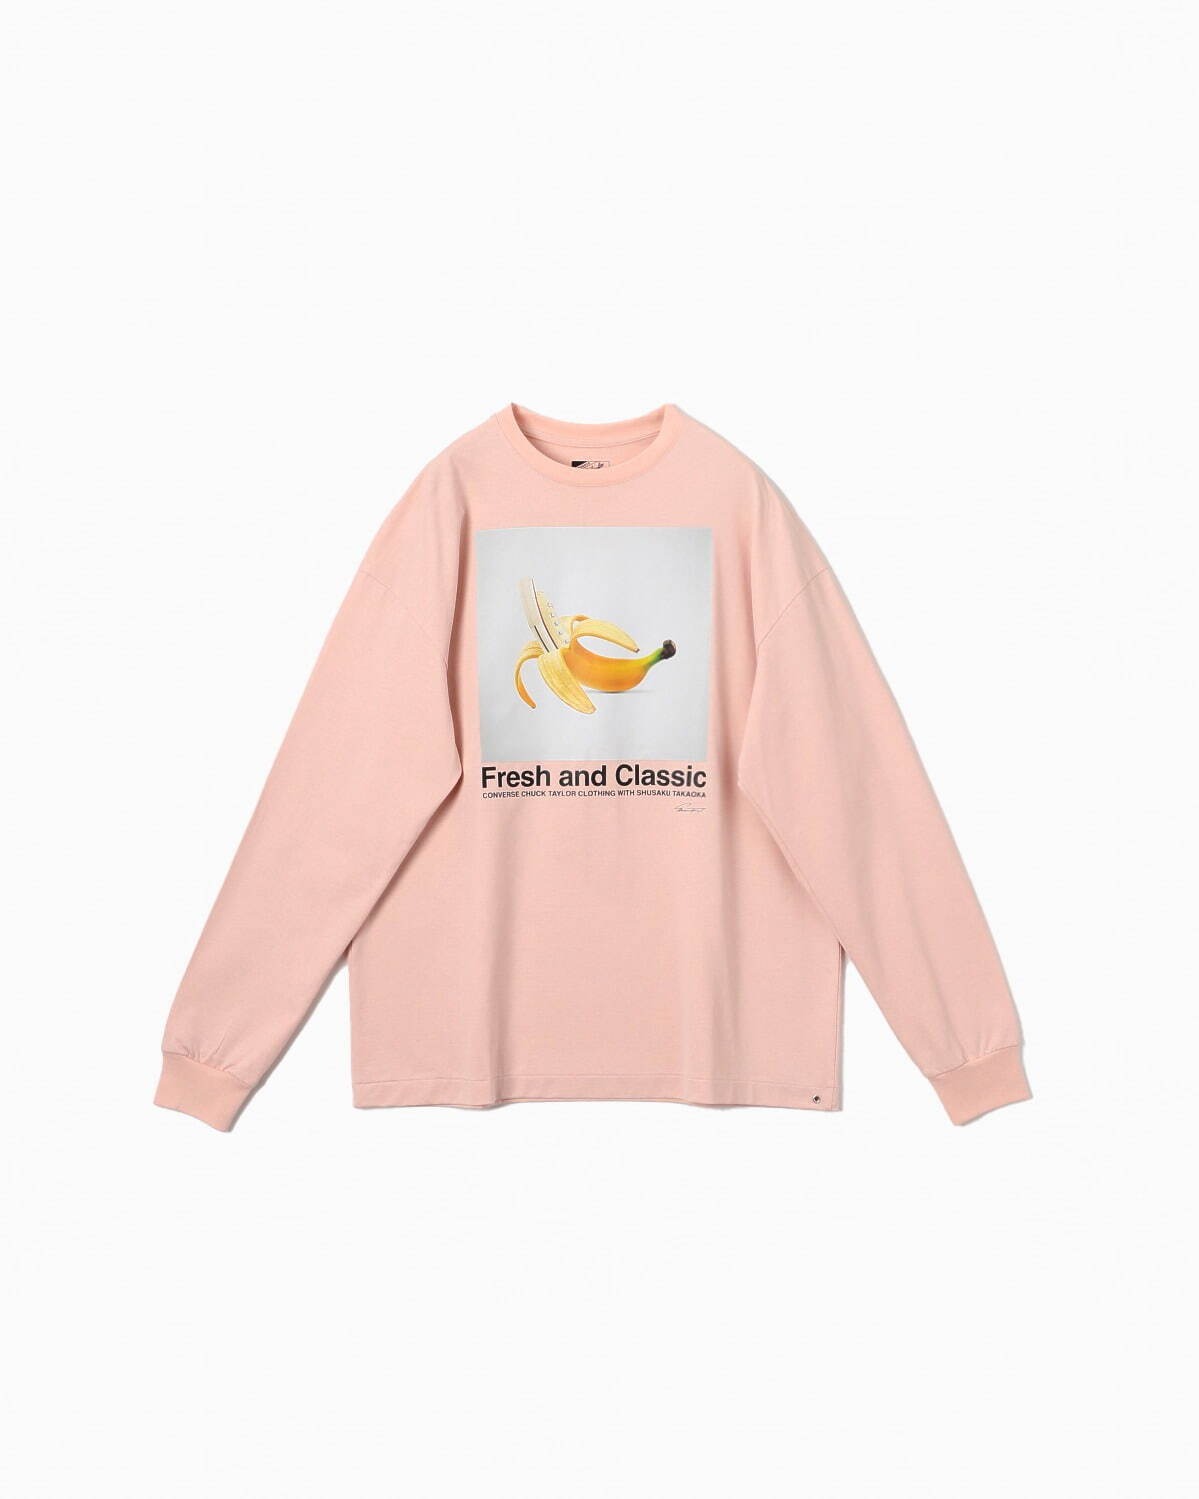 Converse Japan's banana sweater in pink